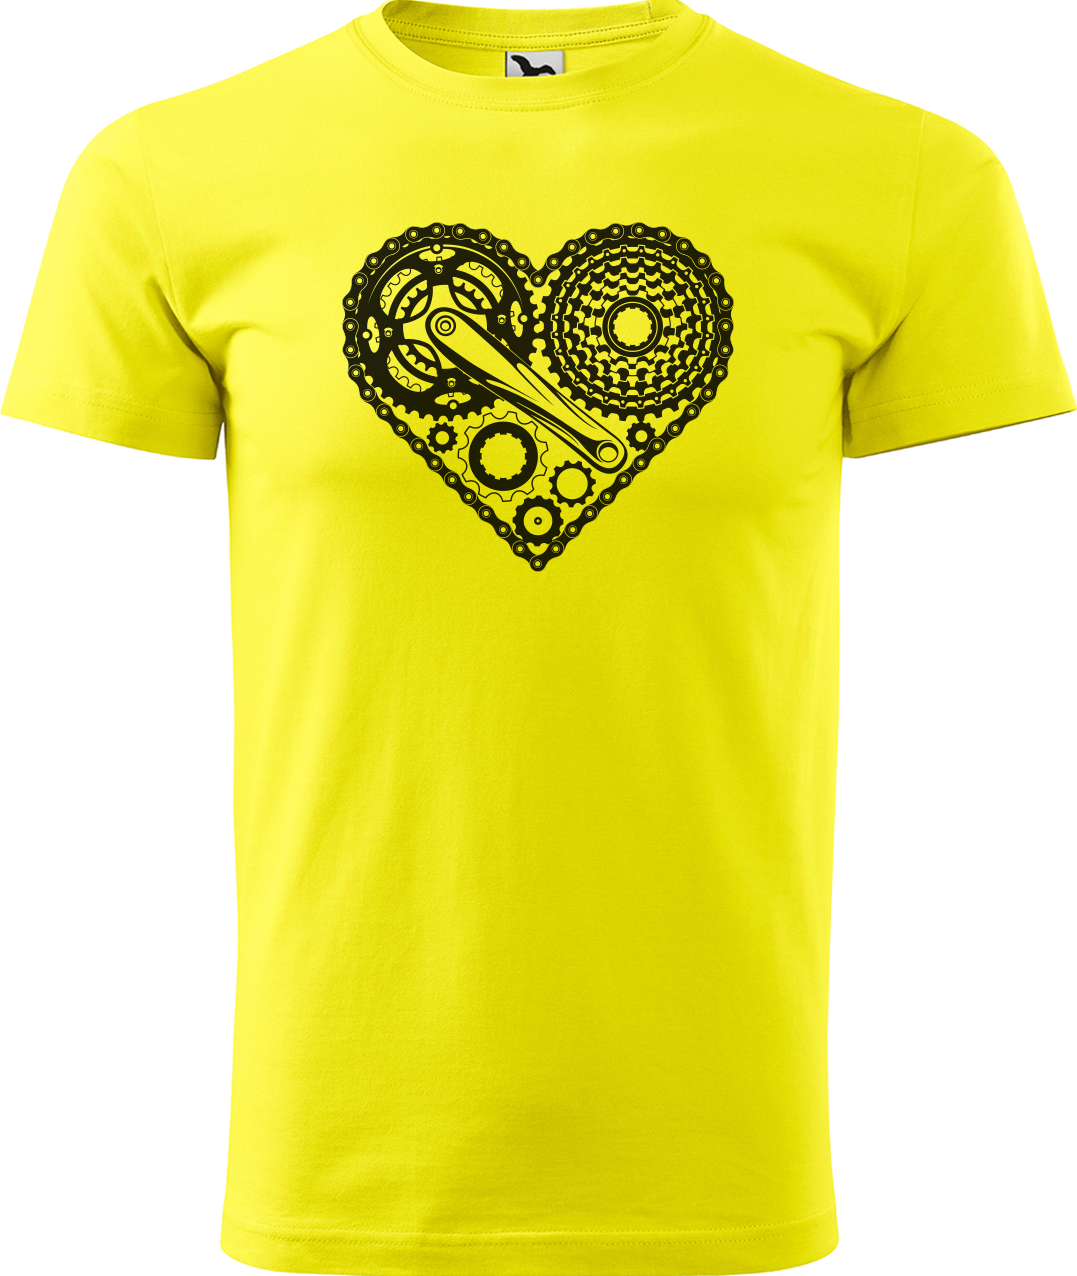 Pánské tričko pro cyklistu - Cyklosrdce Velikost: M, Barva: Žlutá (04)